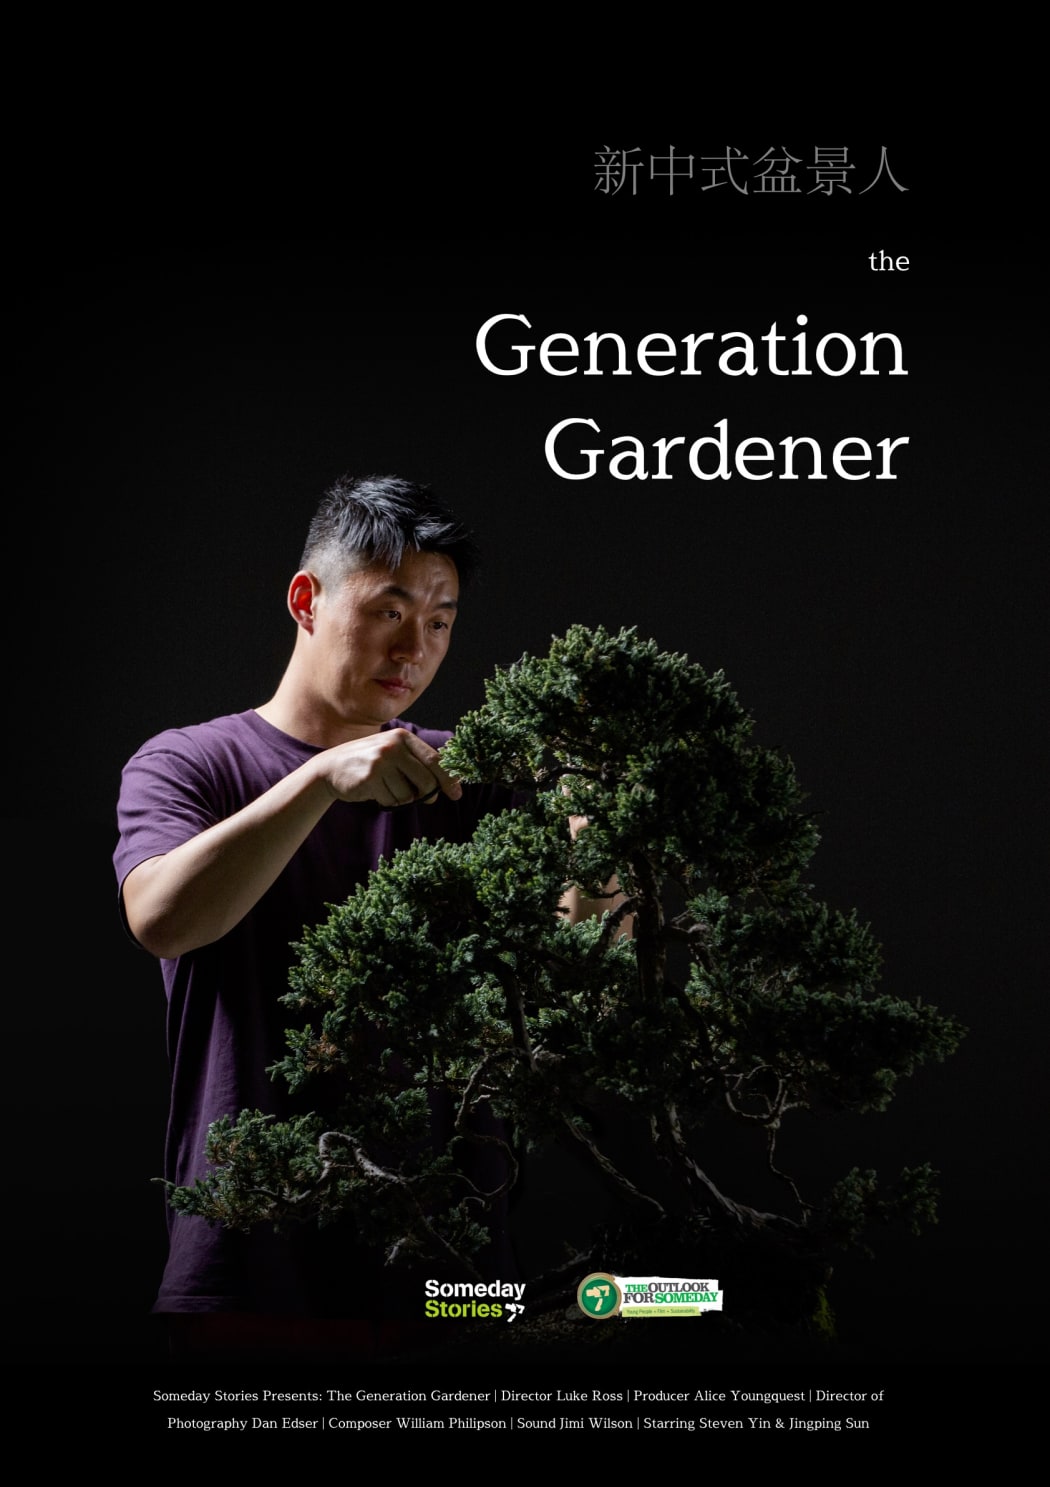 The Generation Gardener